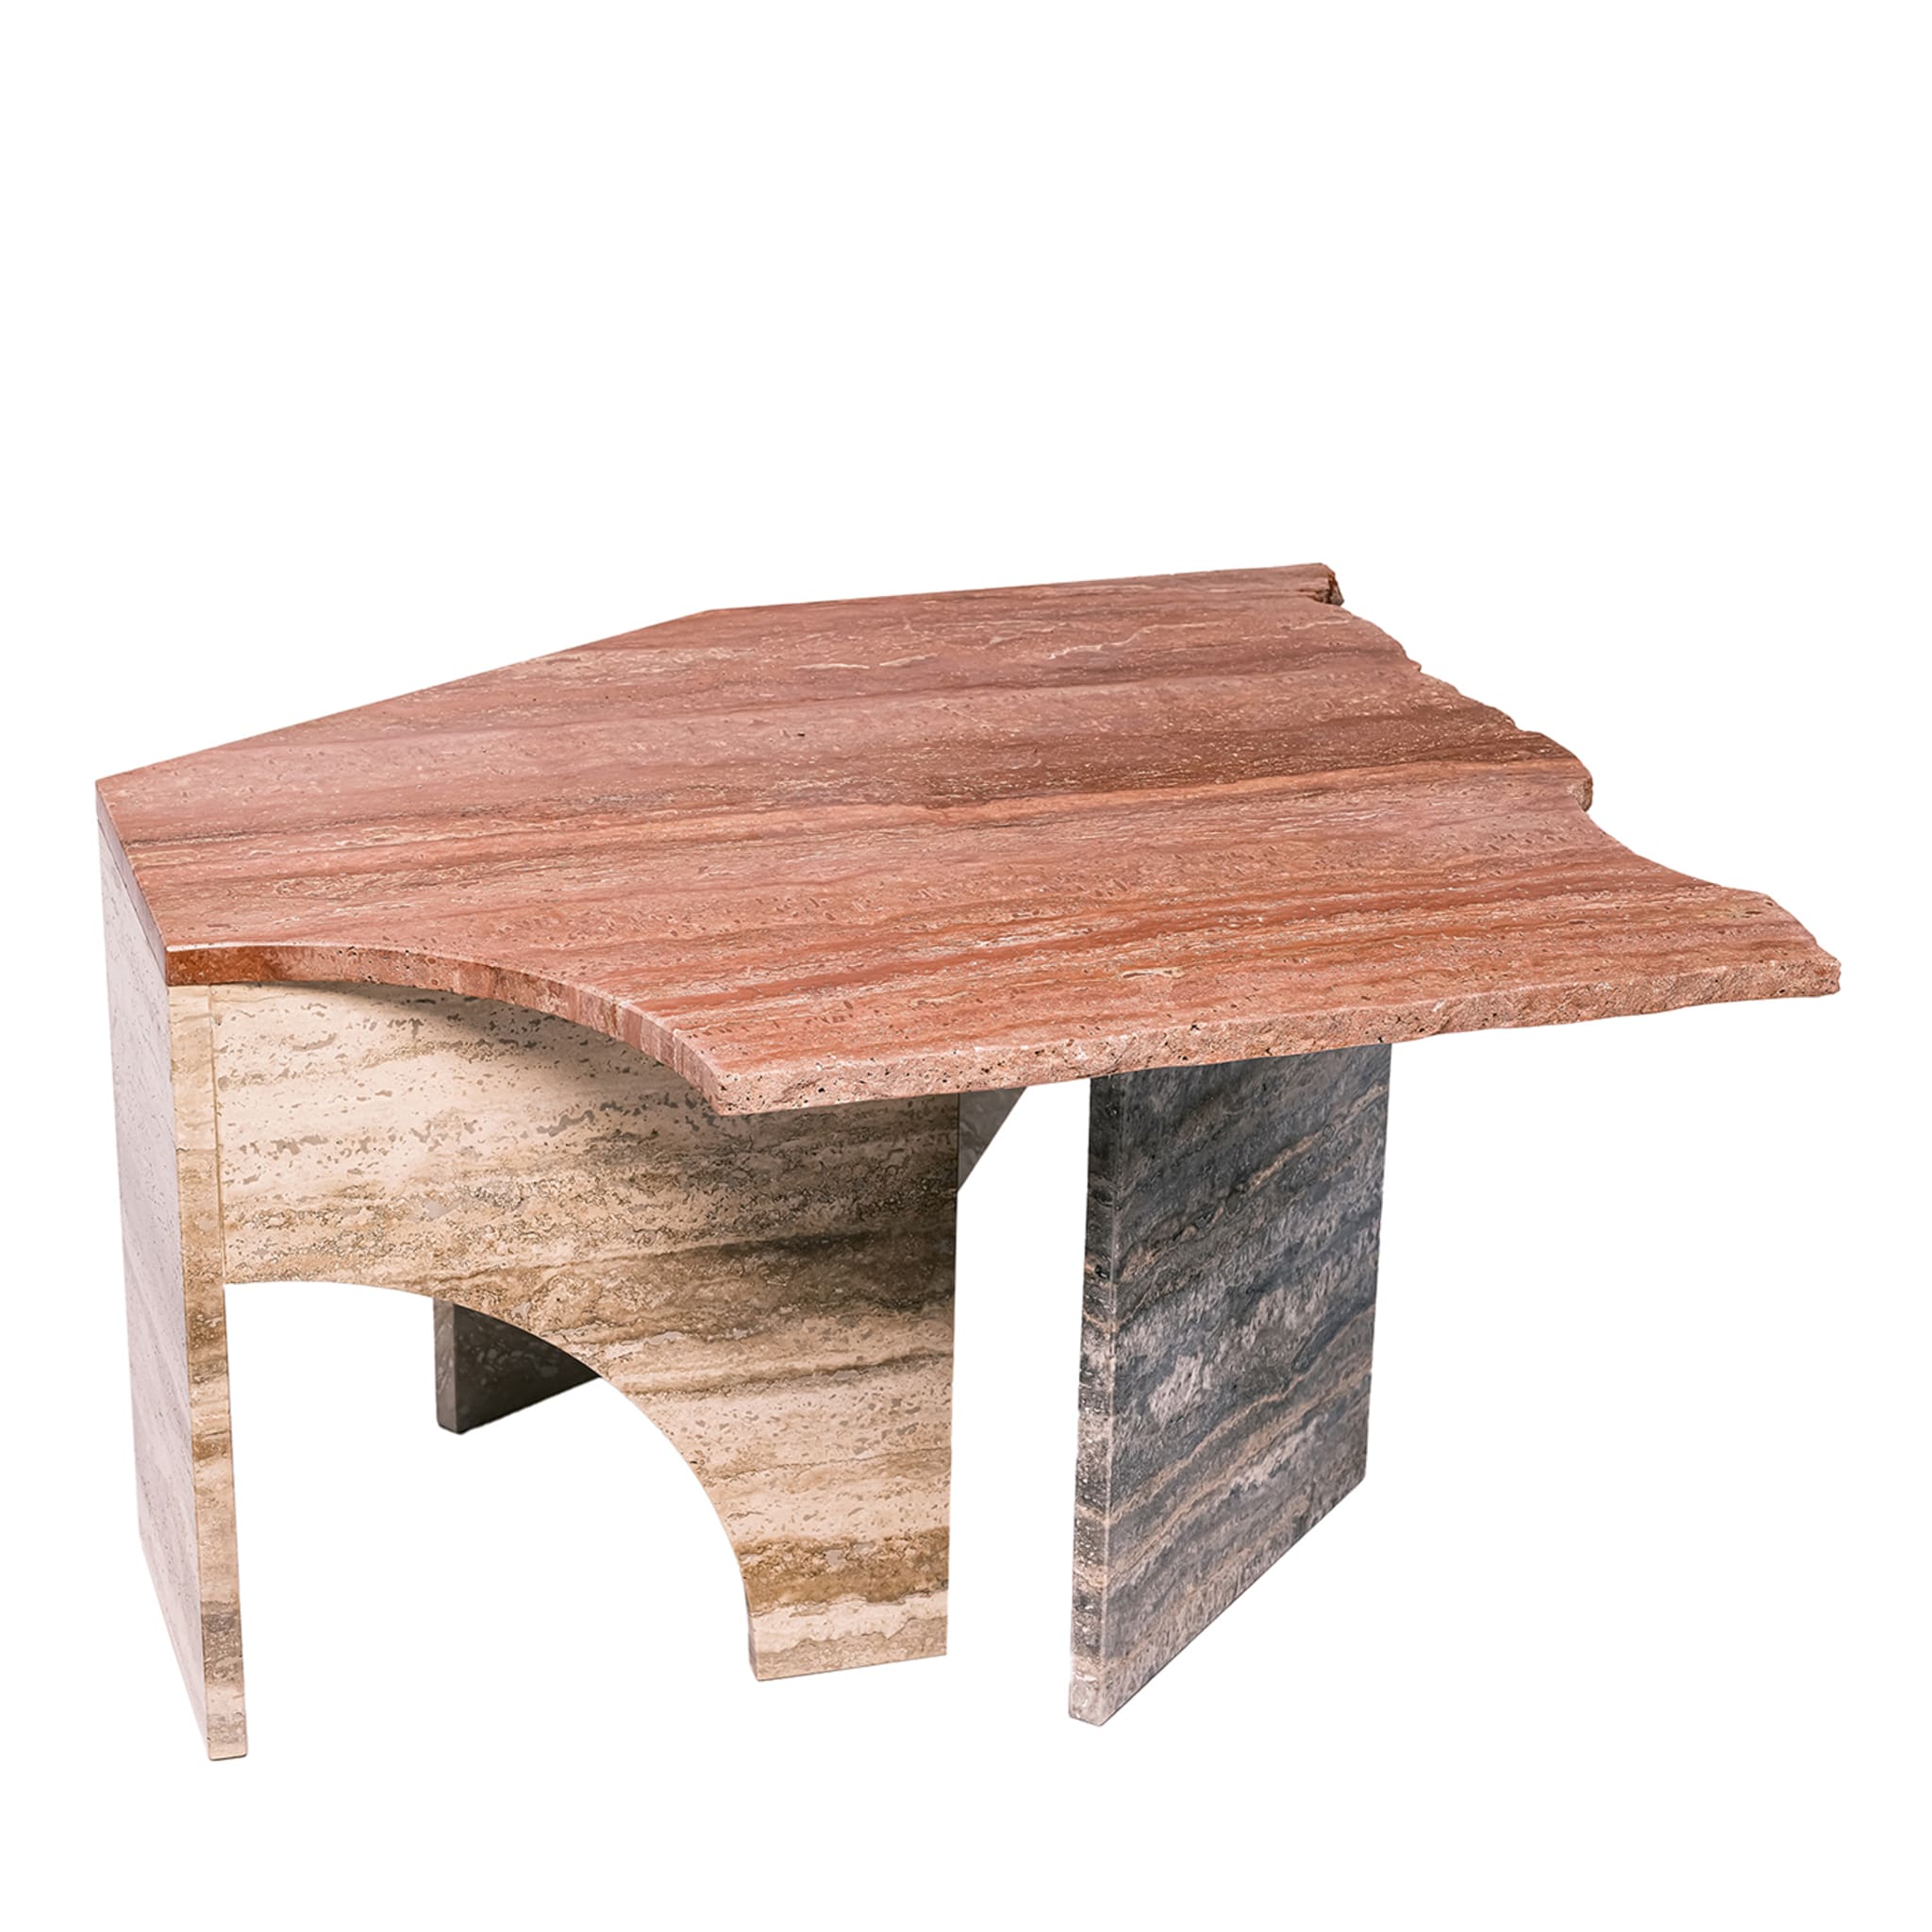 Ritagli B Asymmetrical Coffee Table #2 by Studiopepe Design - Main view